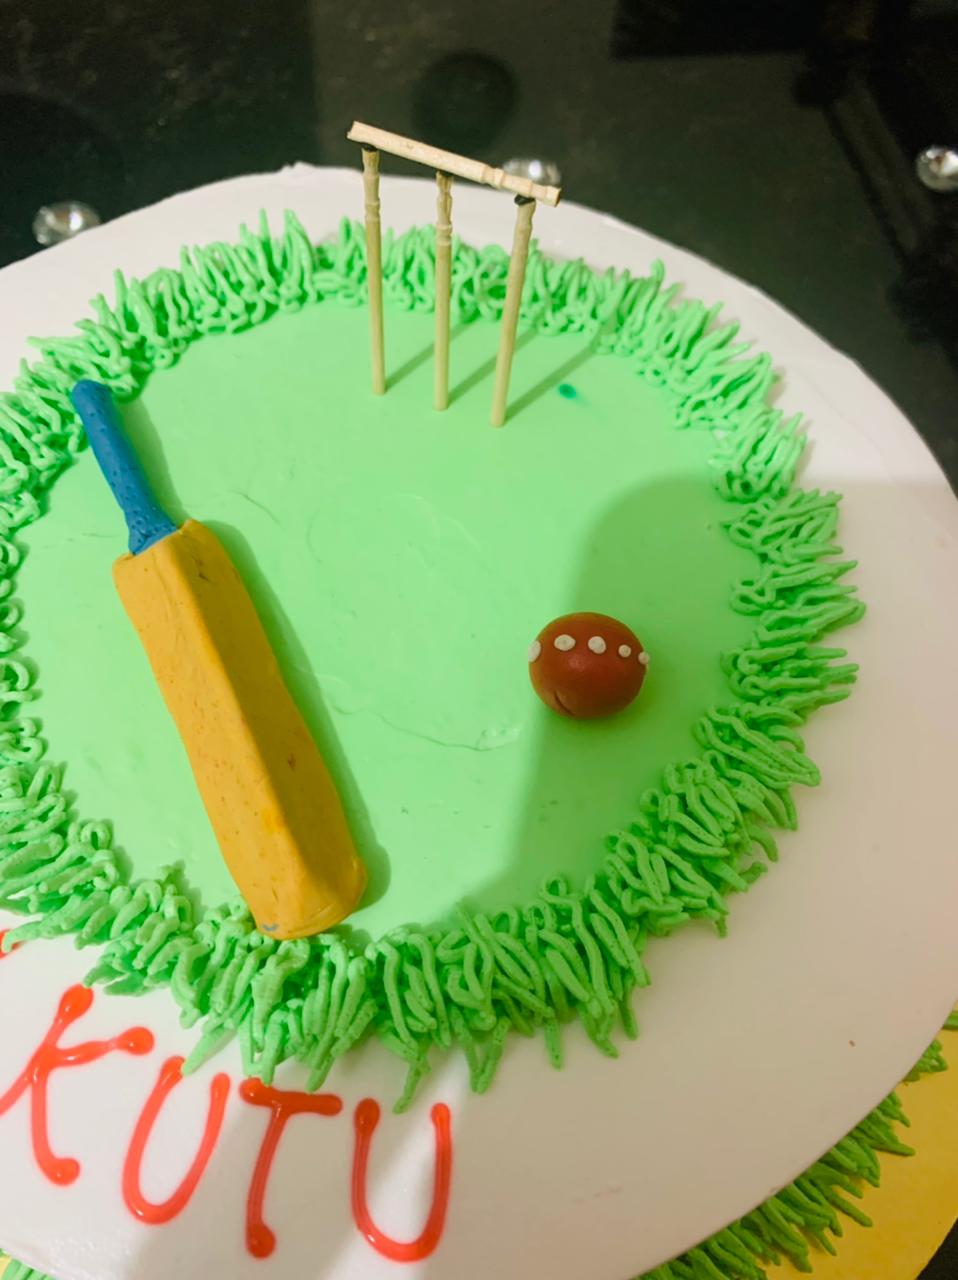 Cricket pitch theme cake 1 kg